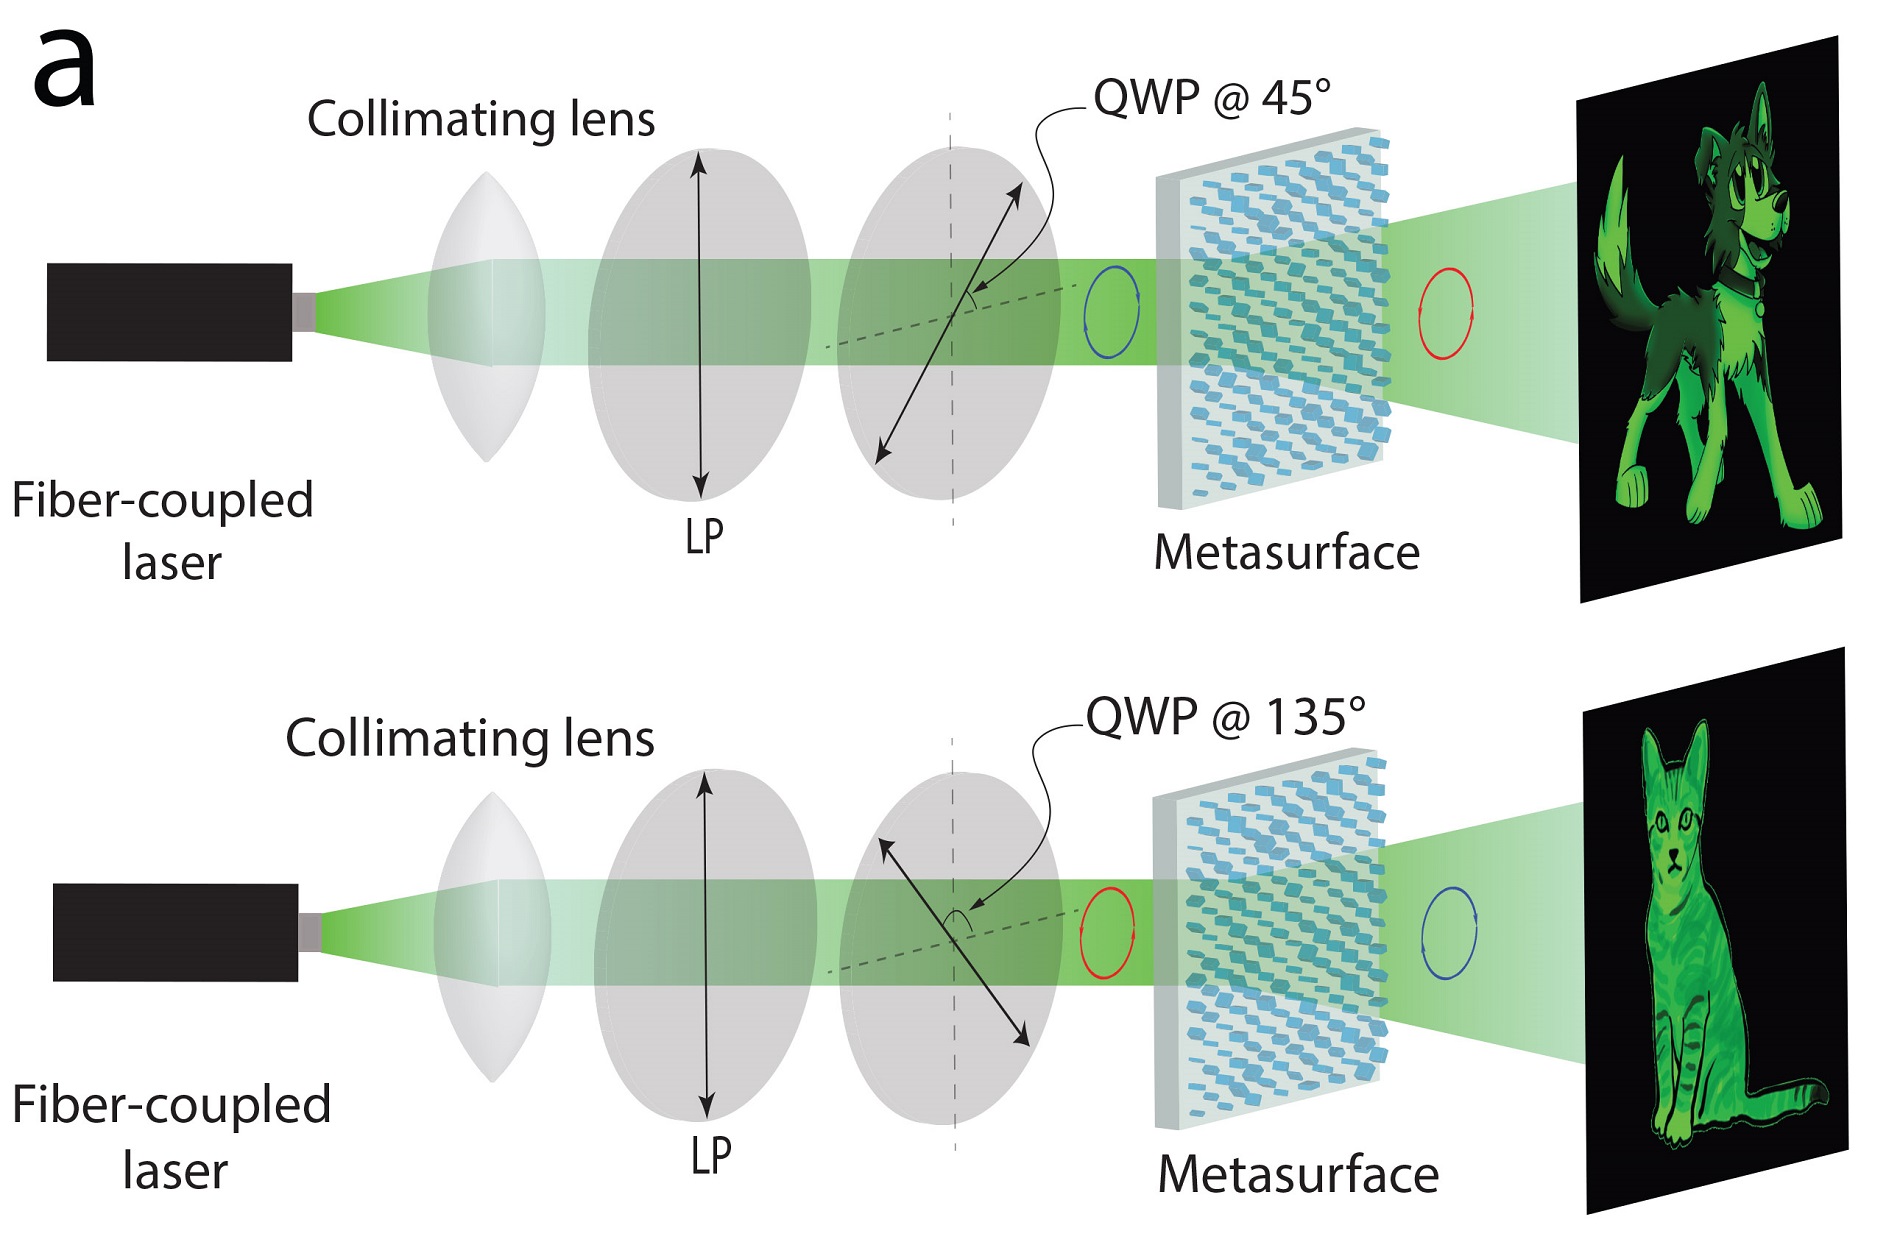 A single metasurface encodes two separate holograms